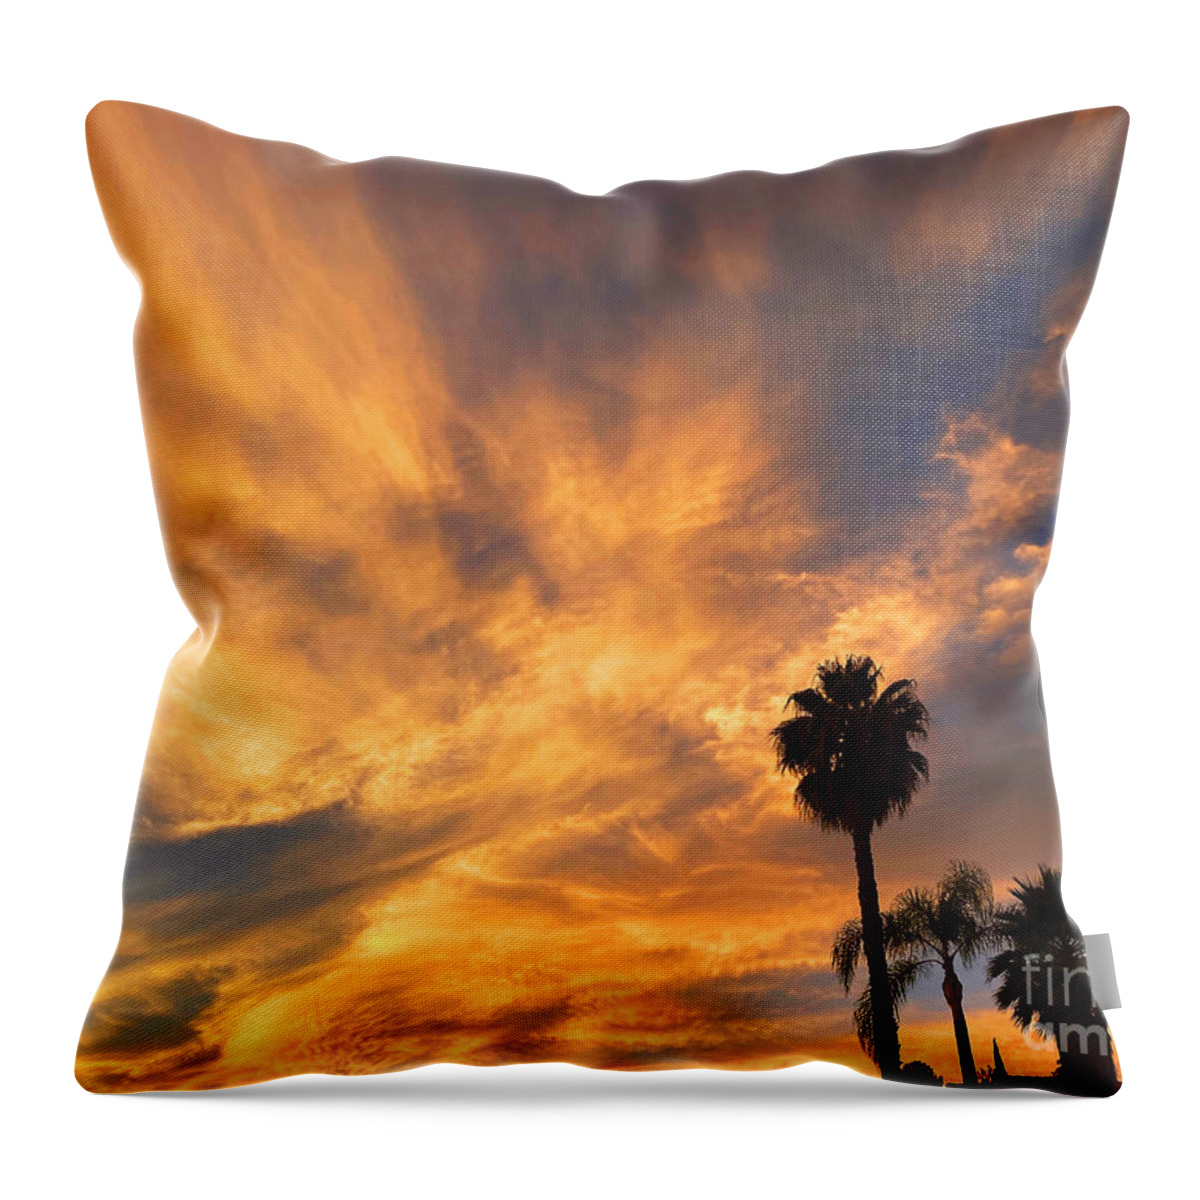 California Throw Pillow featuring the photograph California October Sunset by Brian Watt